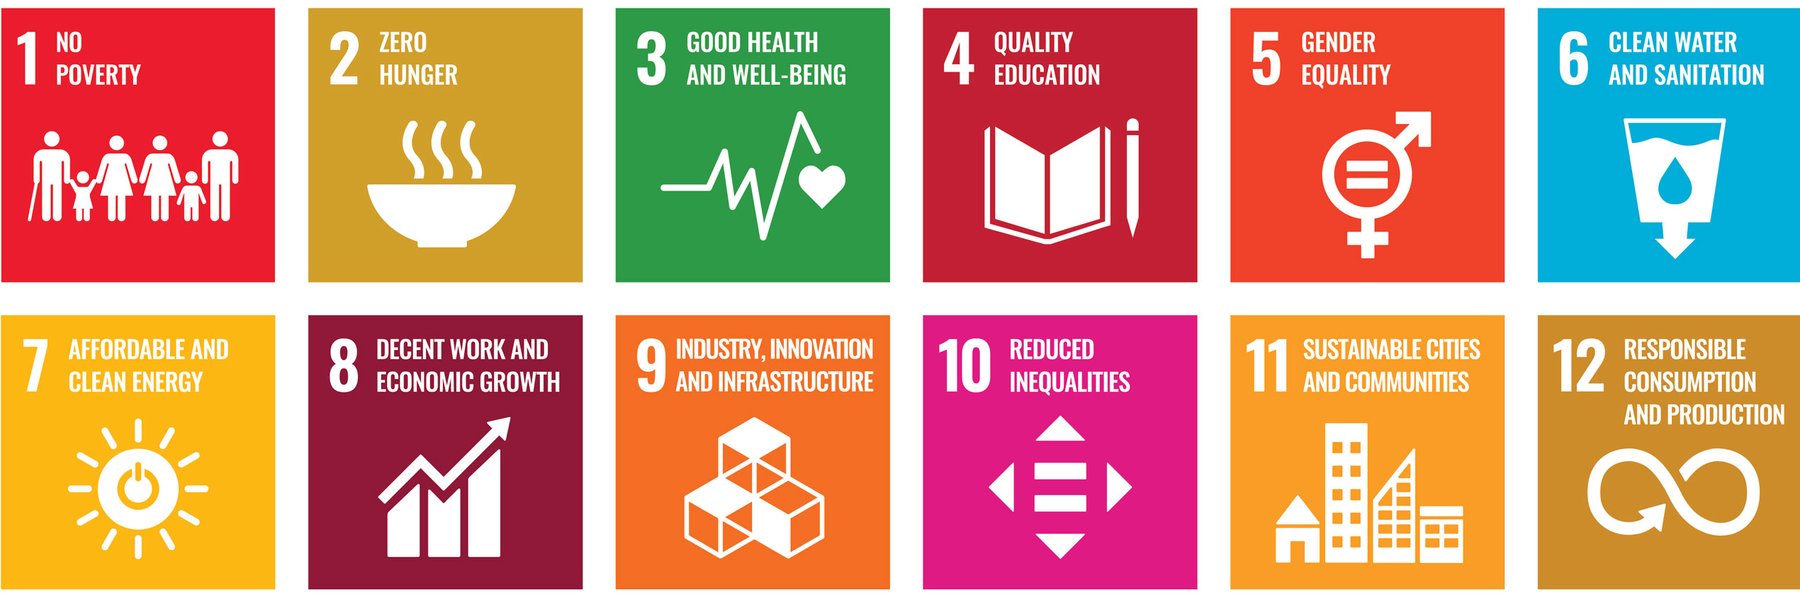 Sustainable Development Goals UN Poster